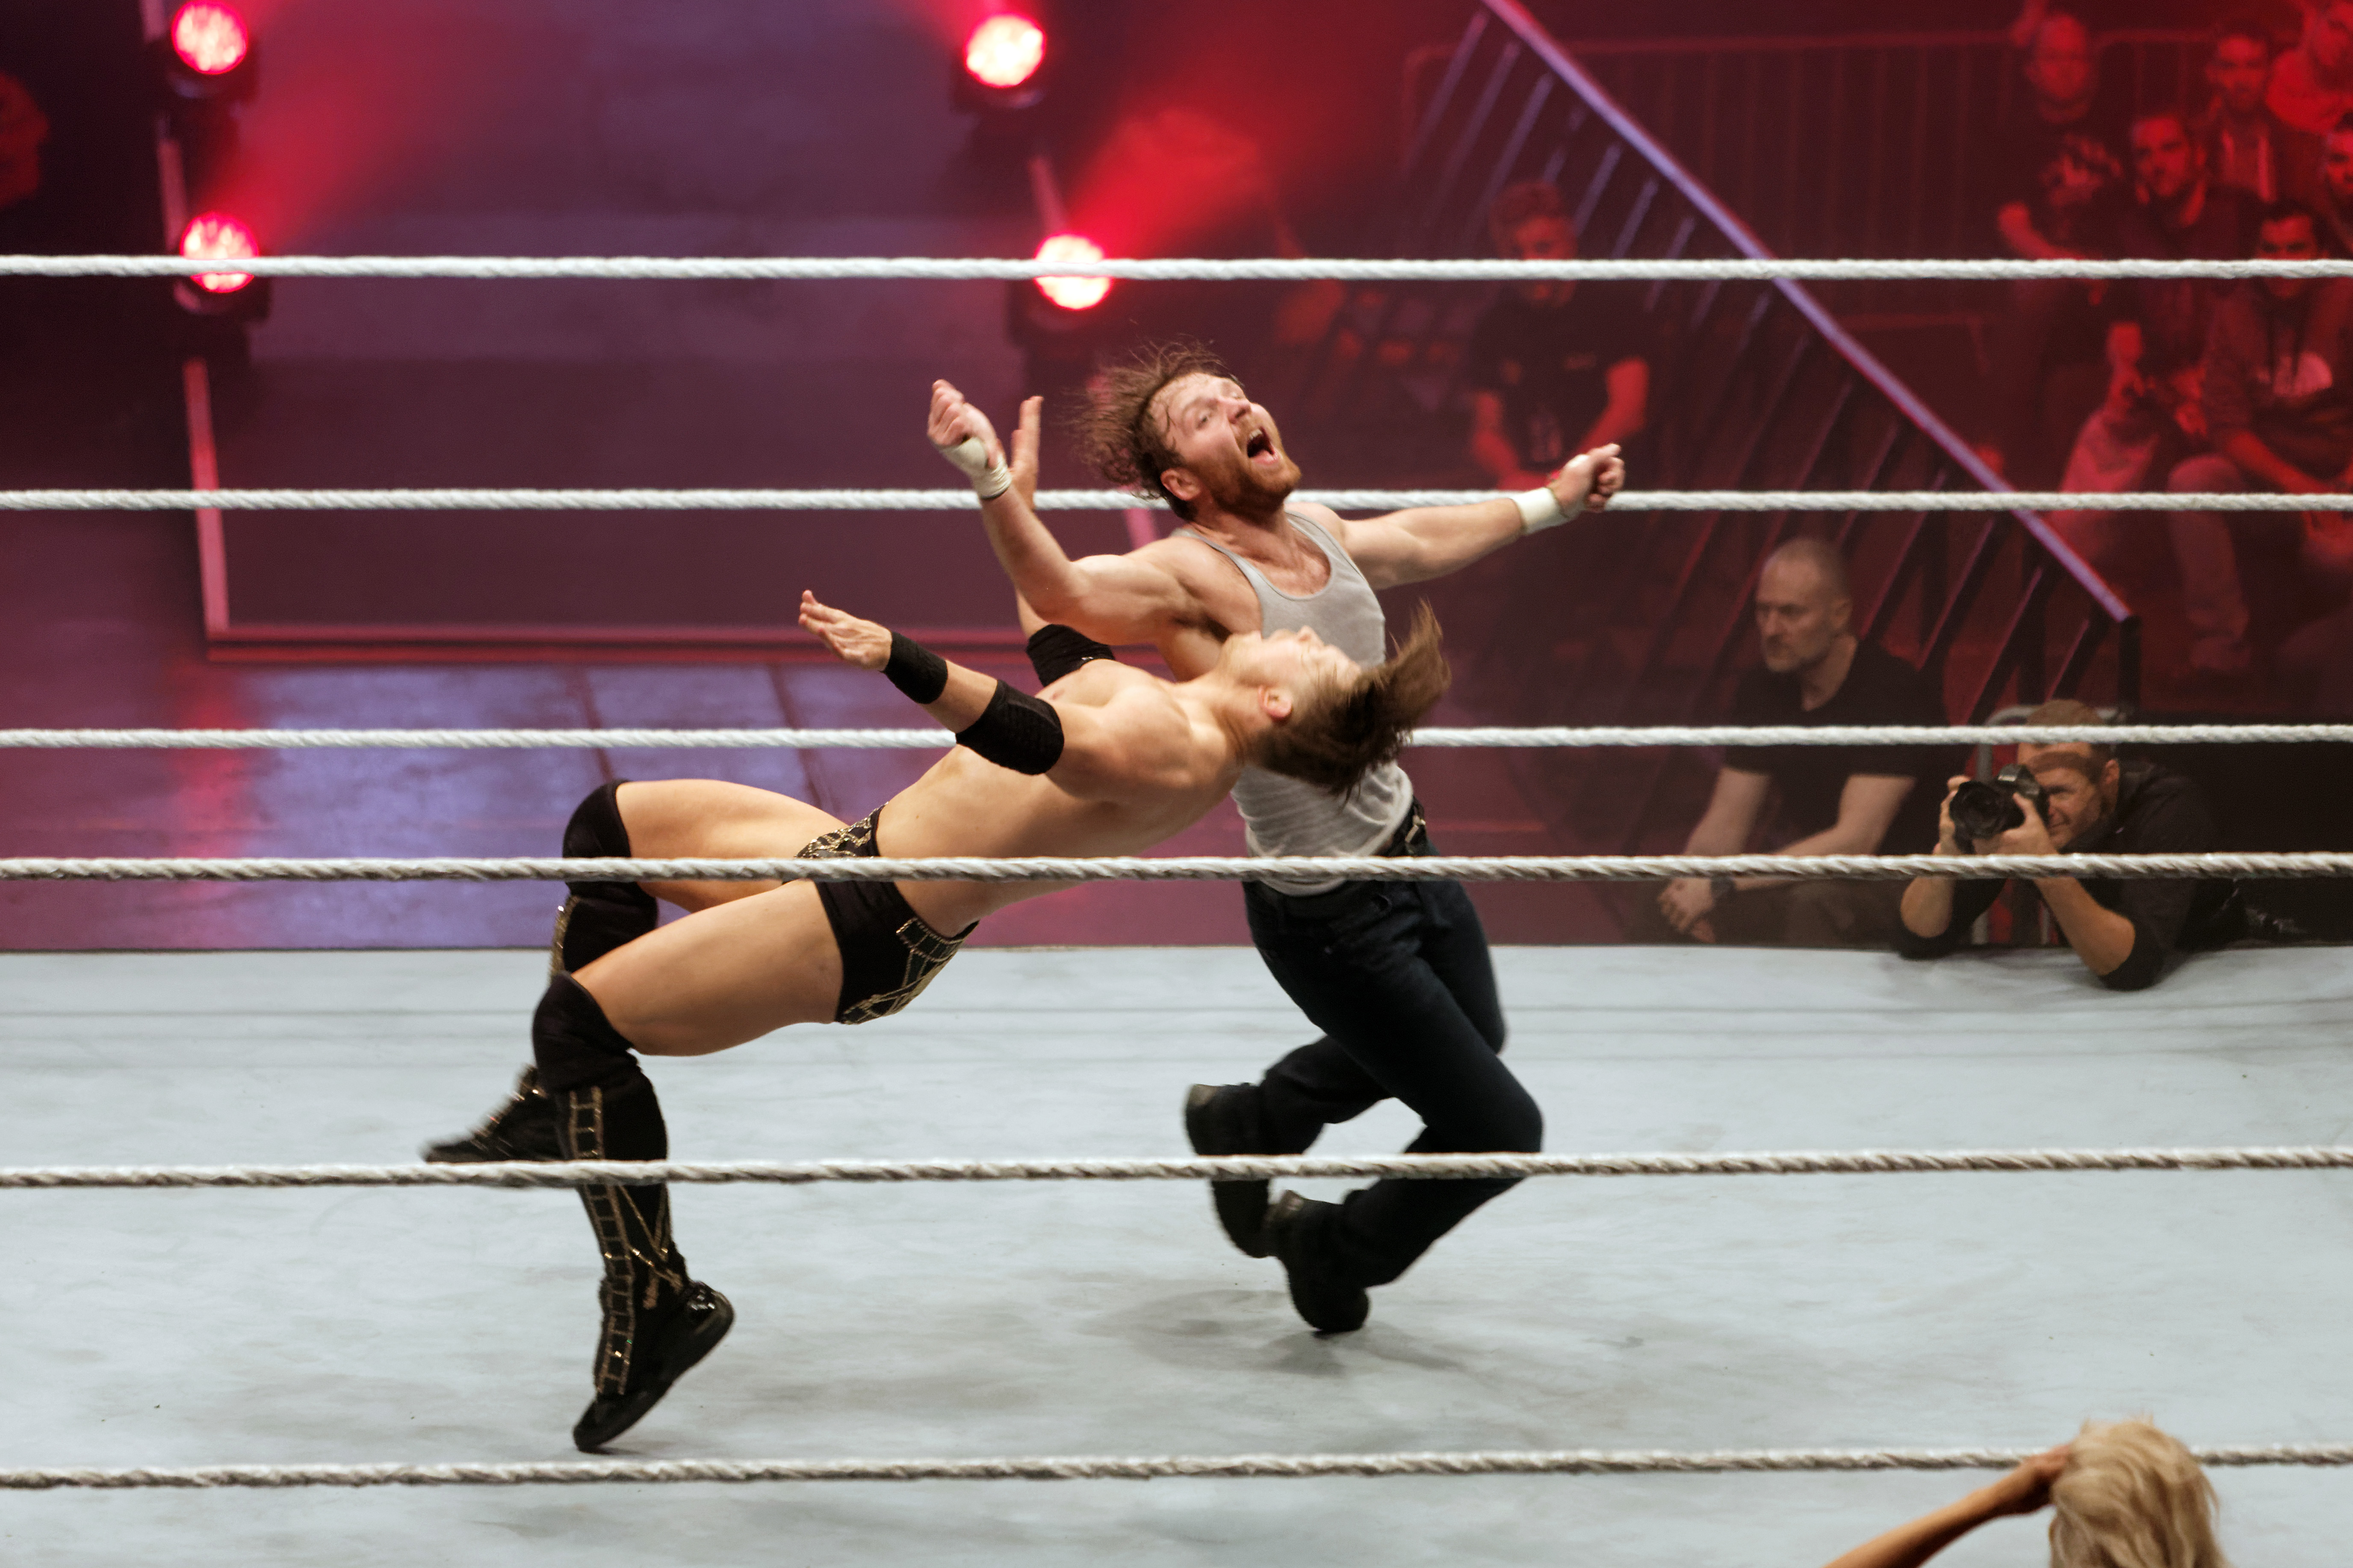 The Miz vs Dean Ambrose